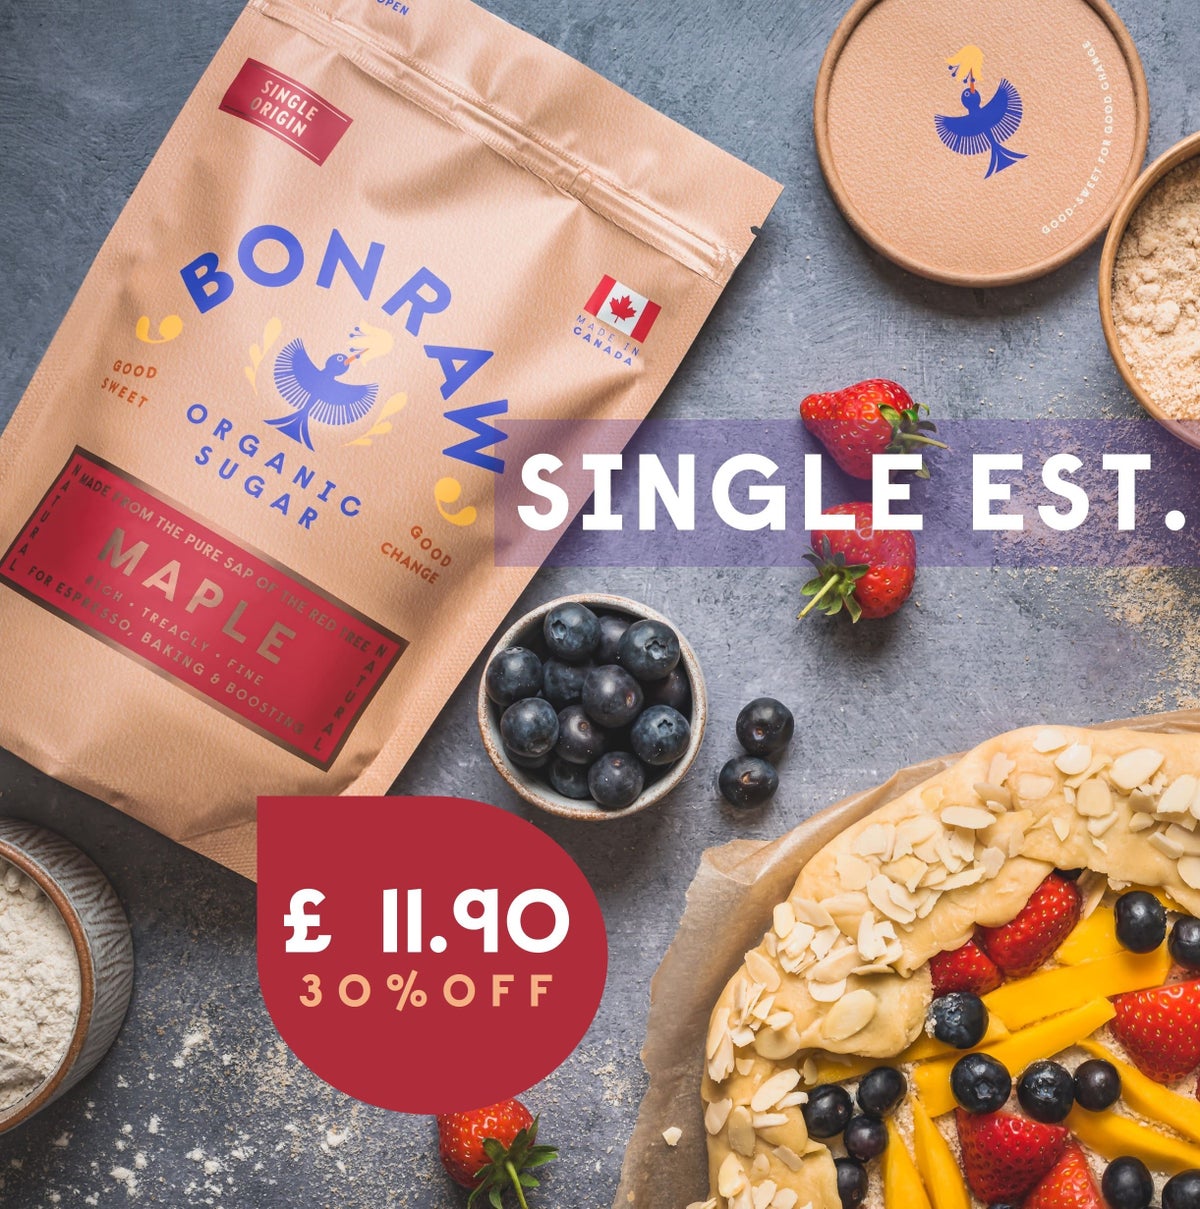 Single est, fine maple sugar. quebec, canada. 30% off. Now £11.90